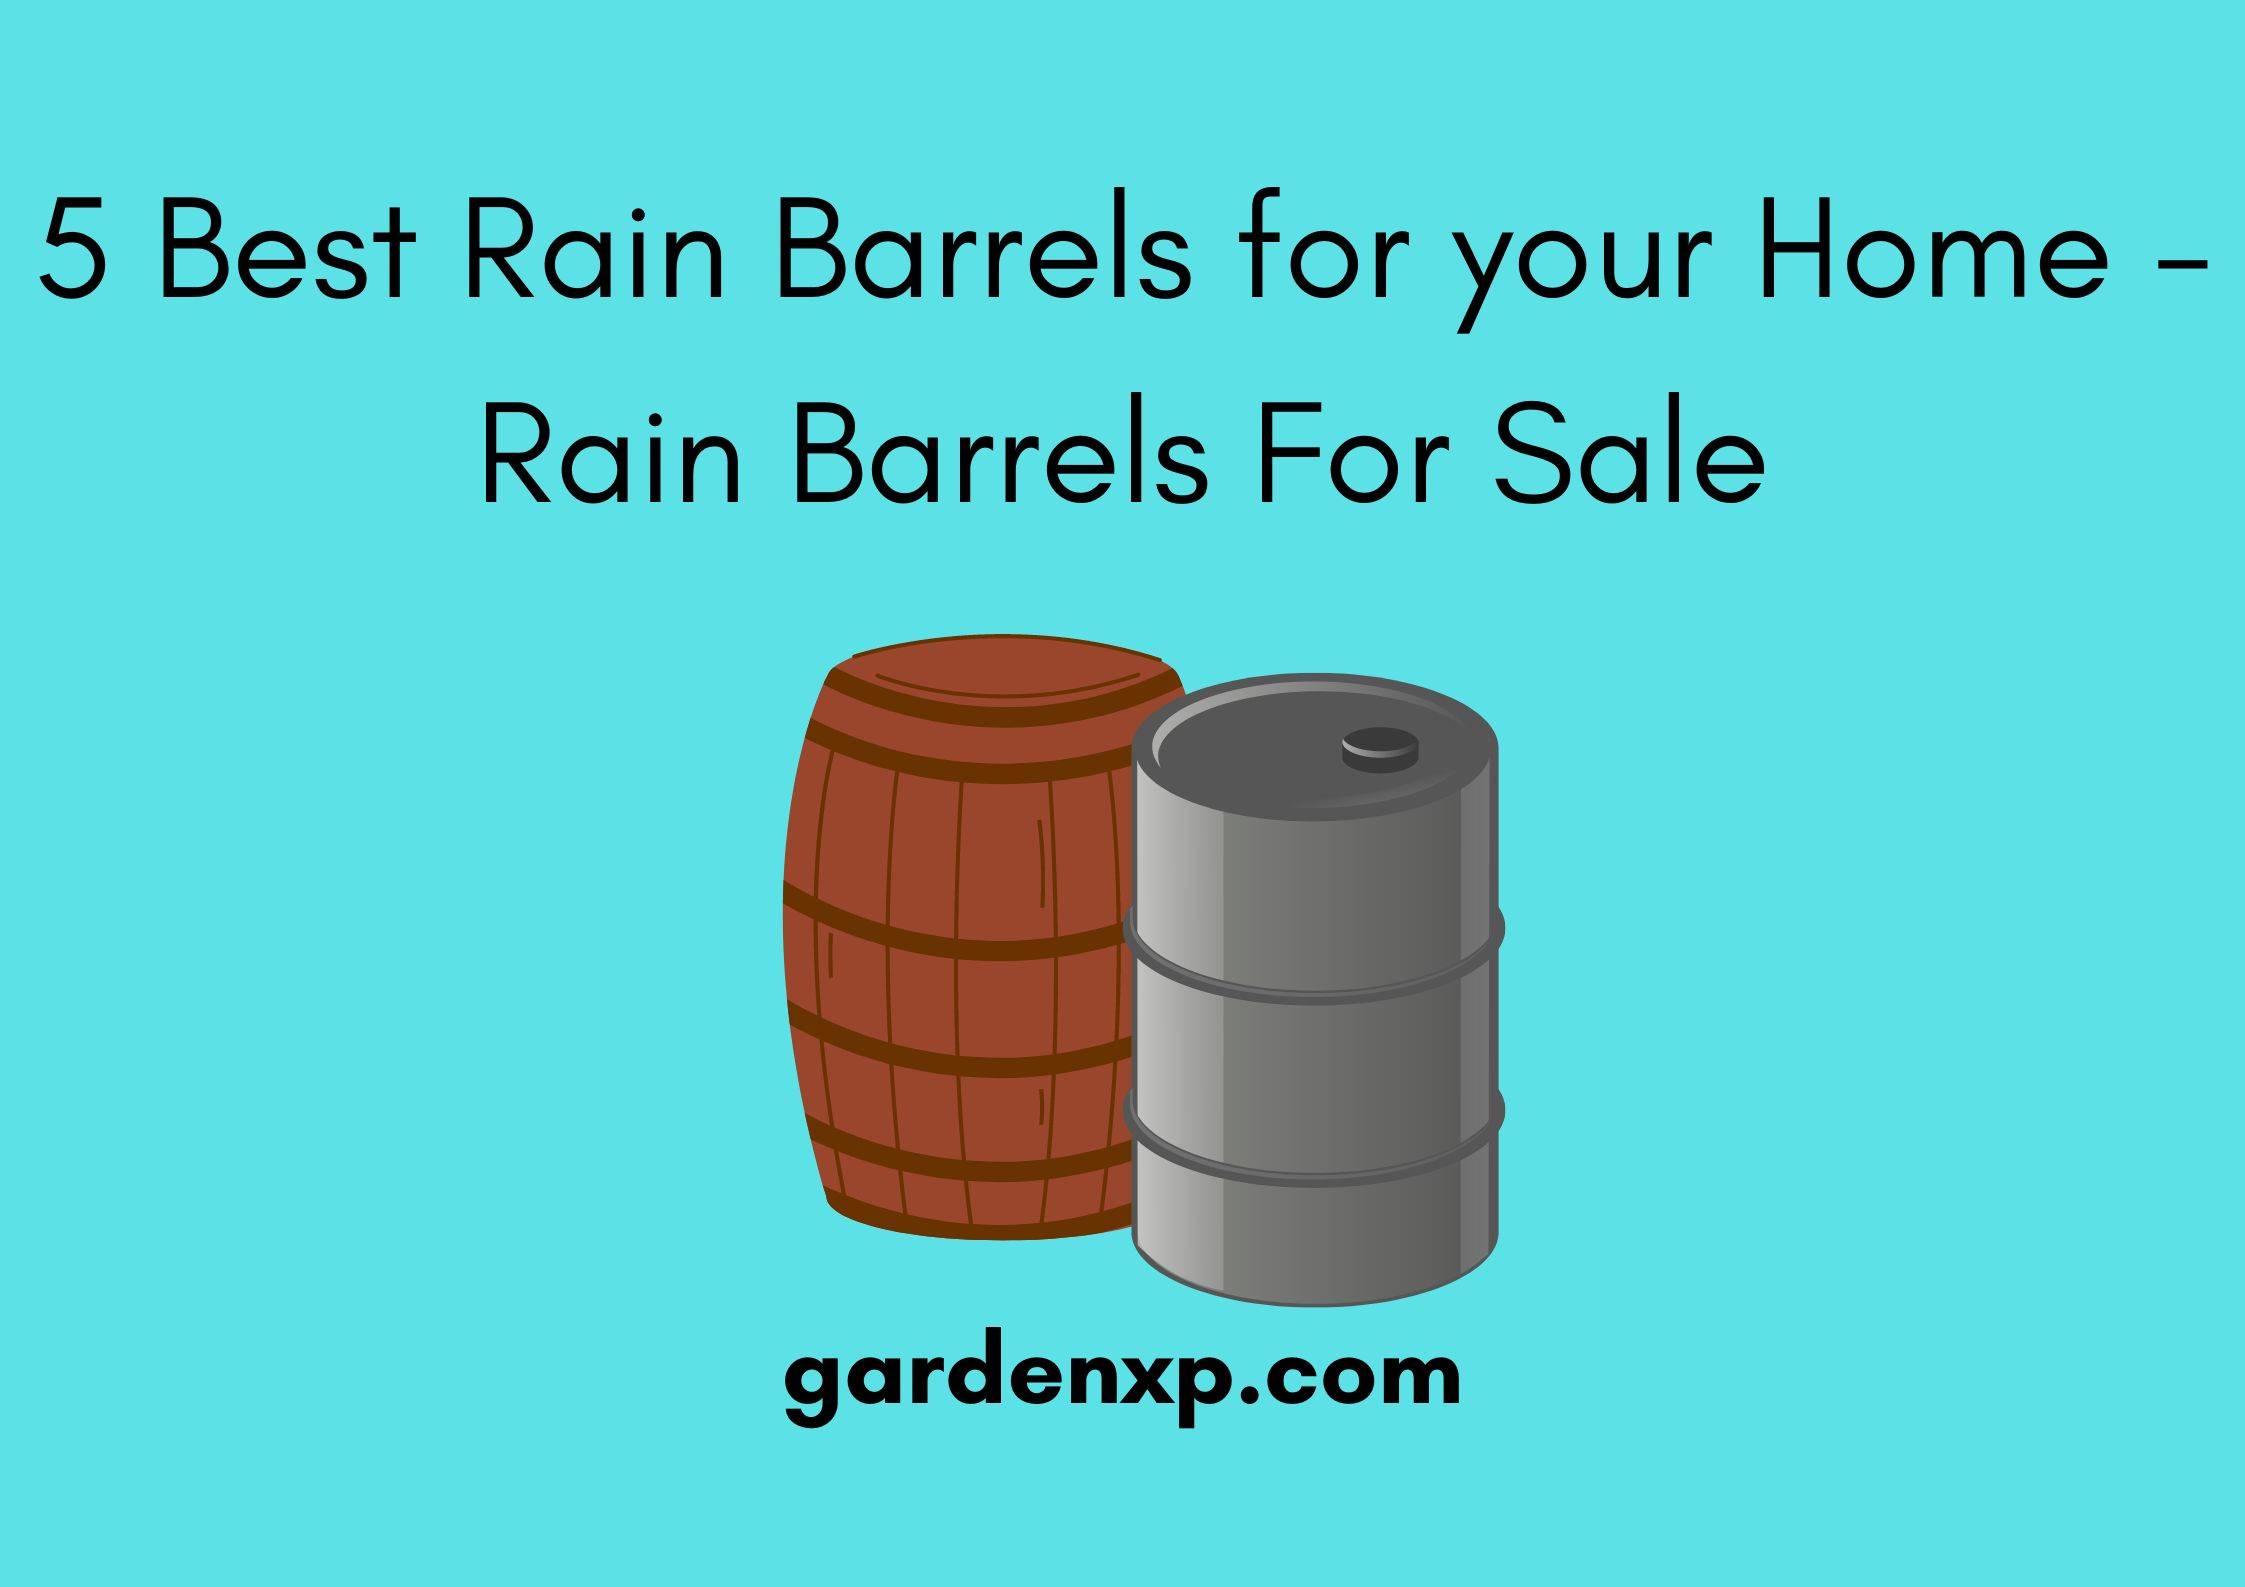 5 Best Rain Barrels for your Home - Rain Barrels For Sale